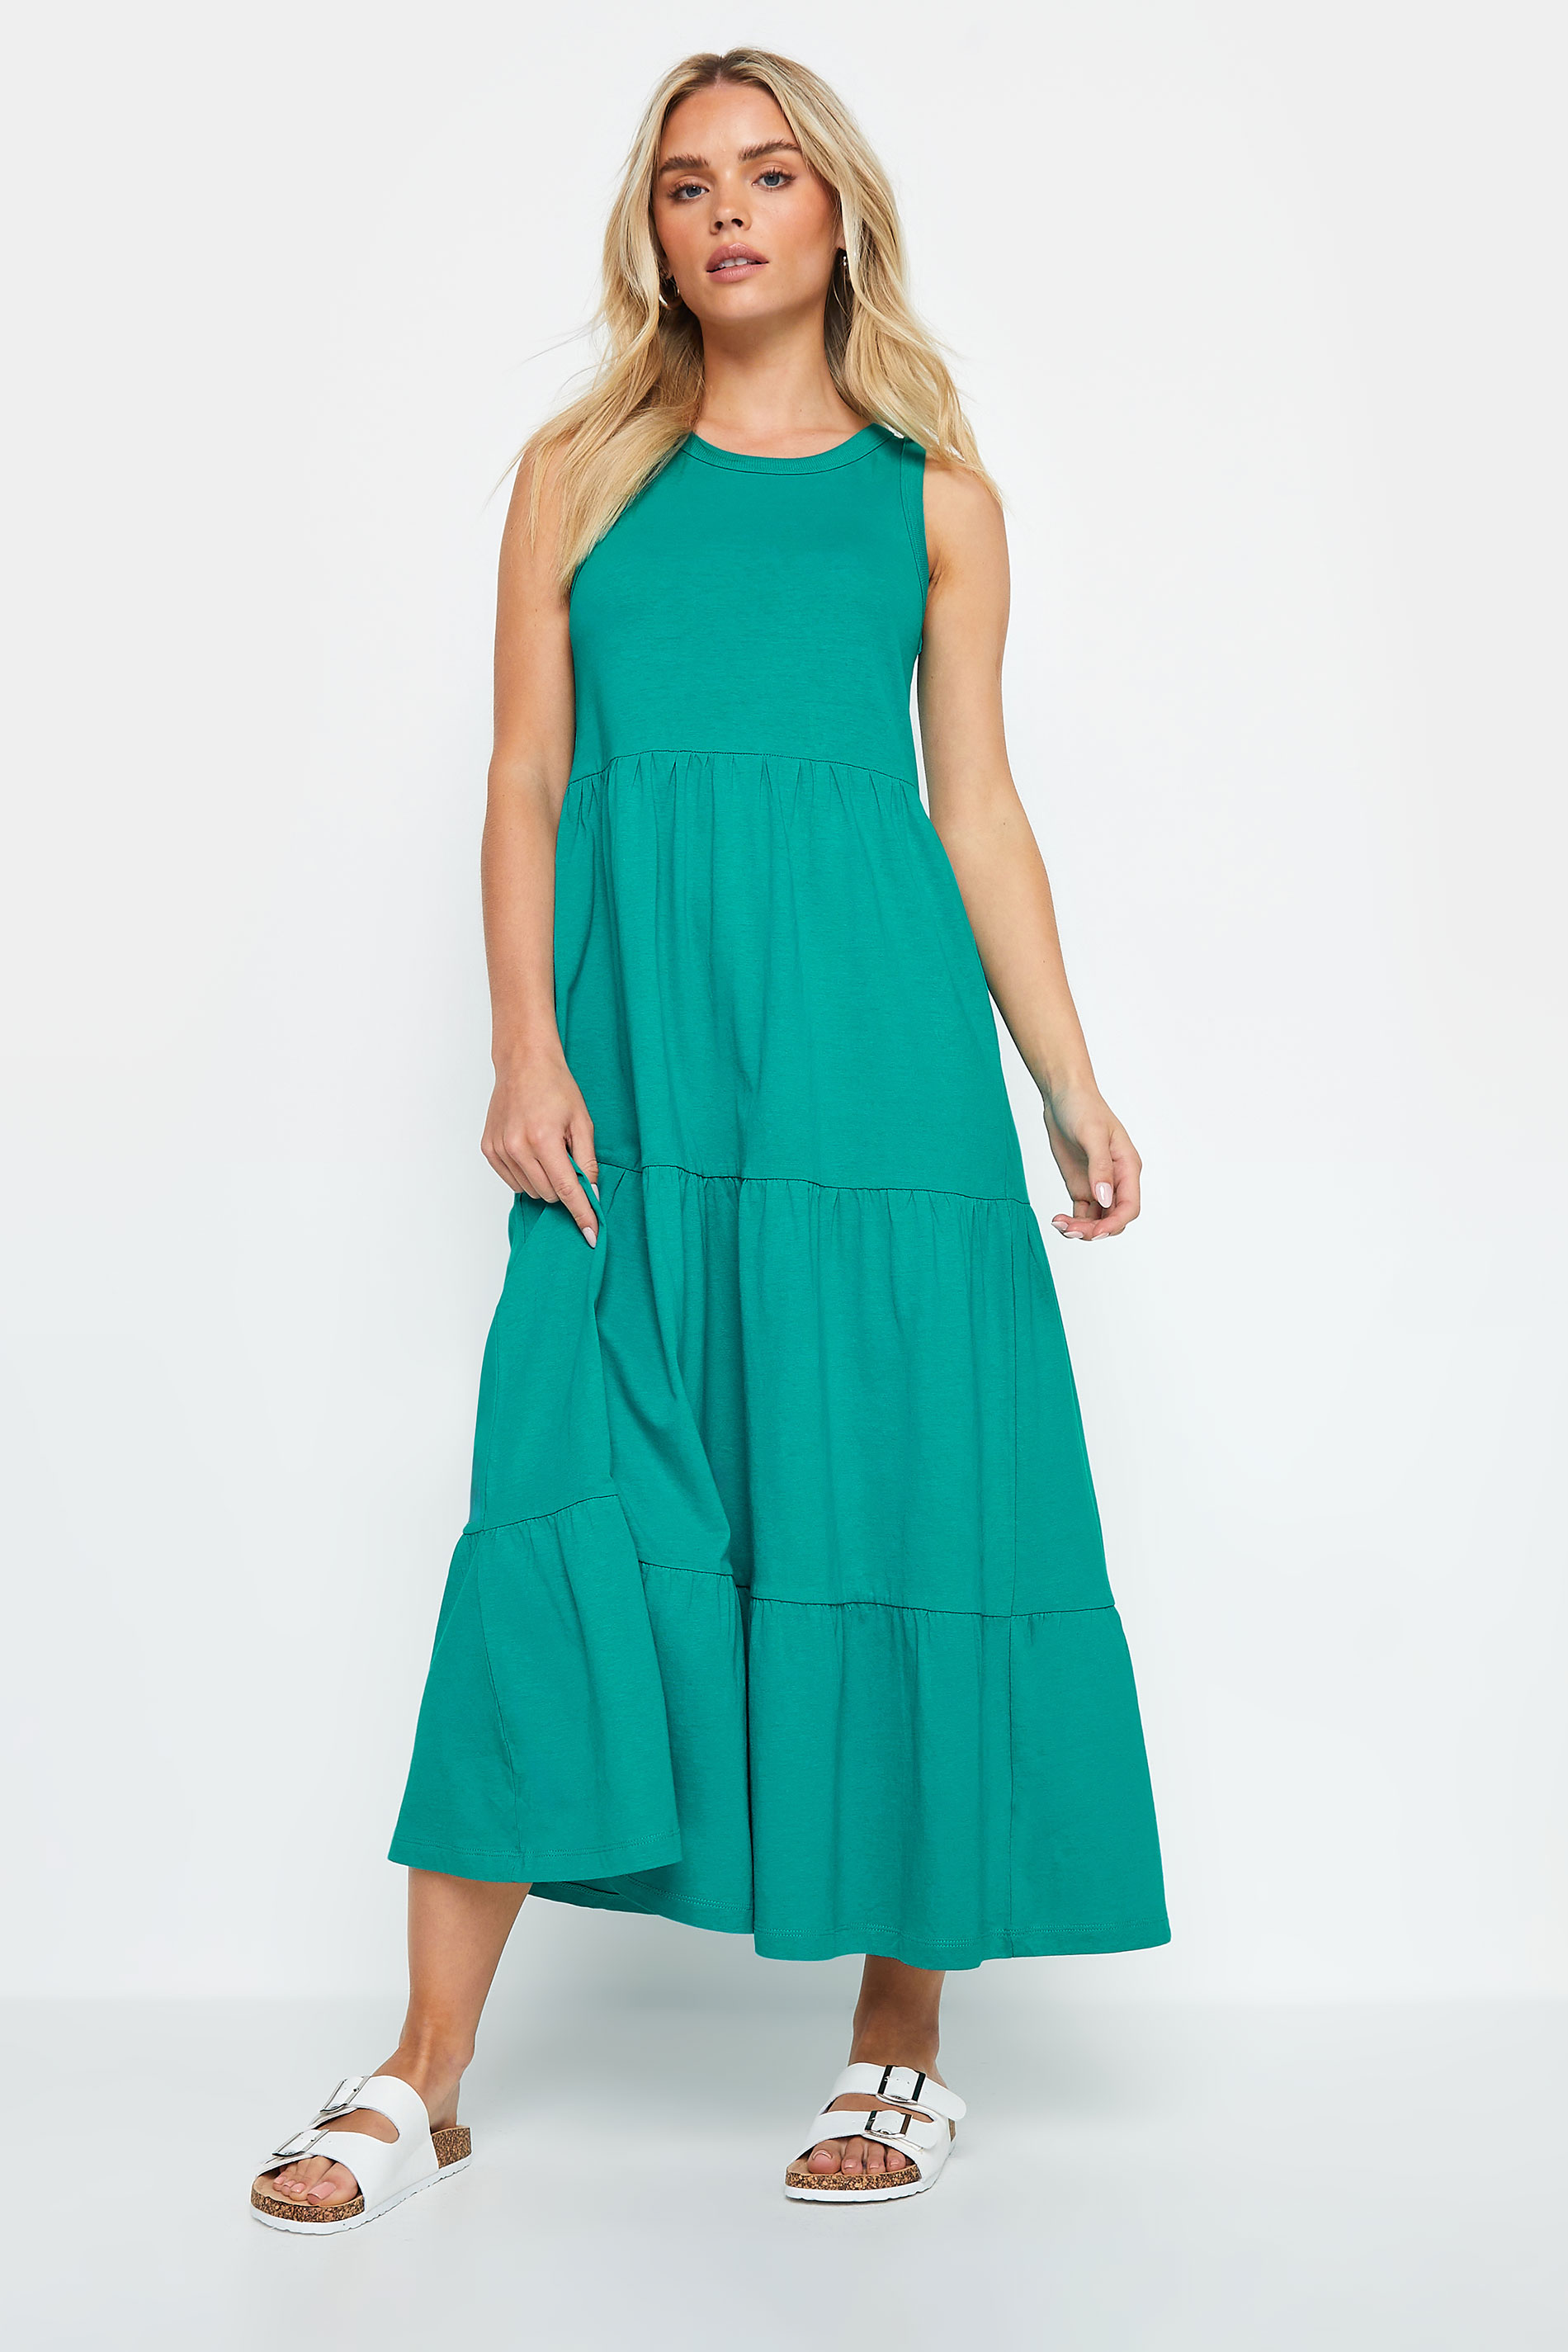 M&Co Petite Green Sleeveless Tiered Dress | M&Co 1